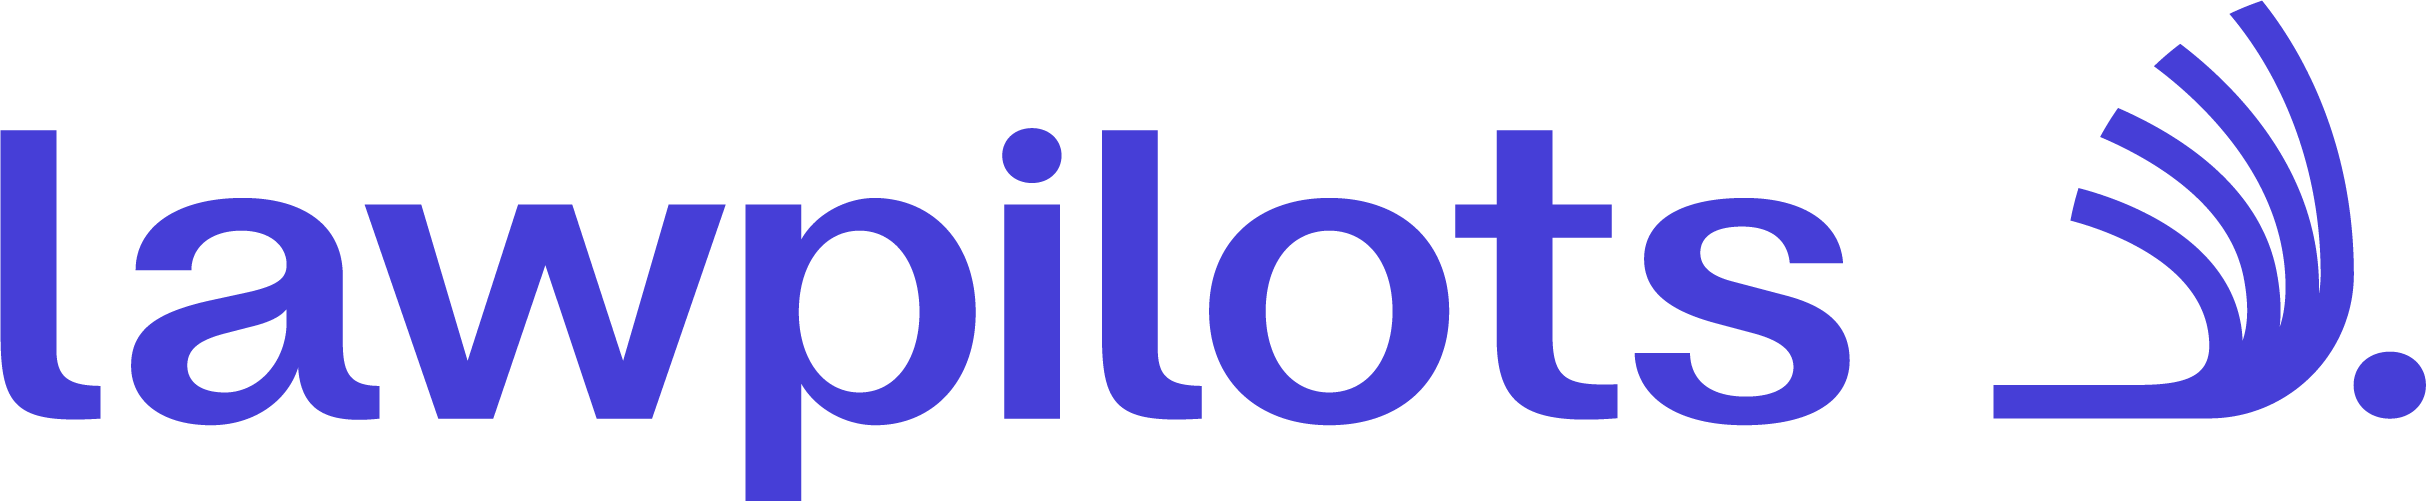 lawpilots GmbH Logo